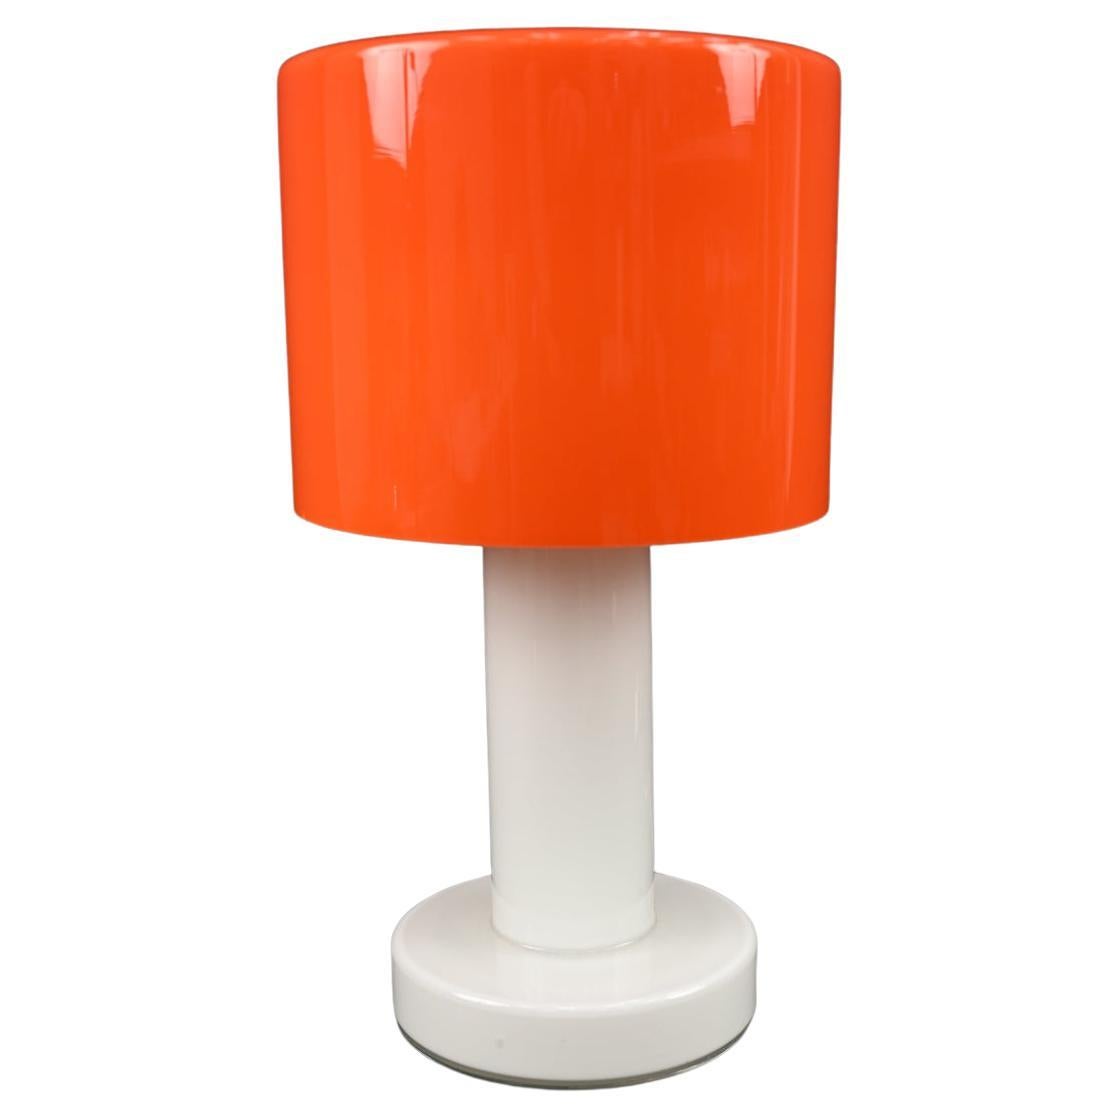 Michael Bang for Holmgaard Rolino-Maxi Table Lamp